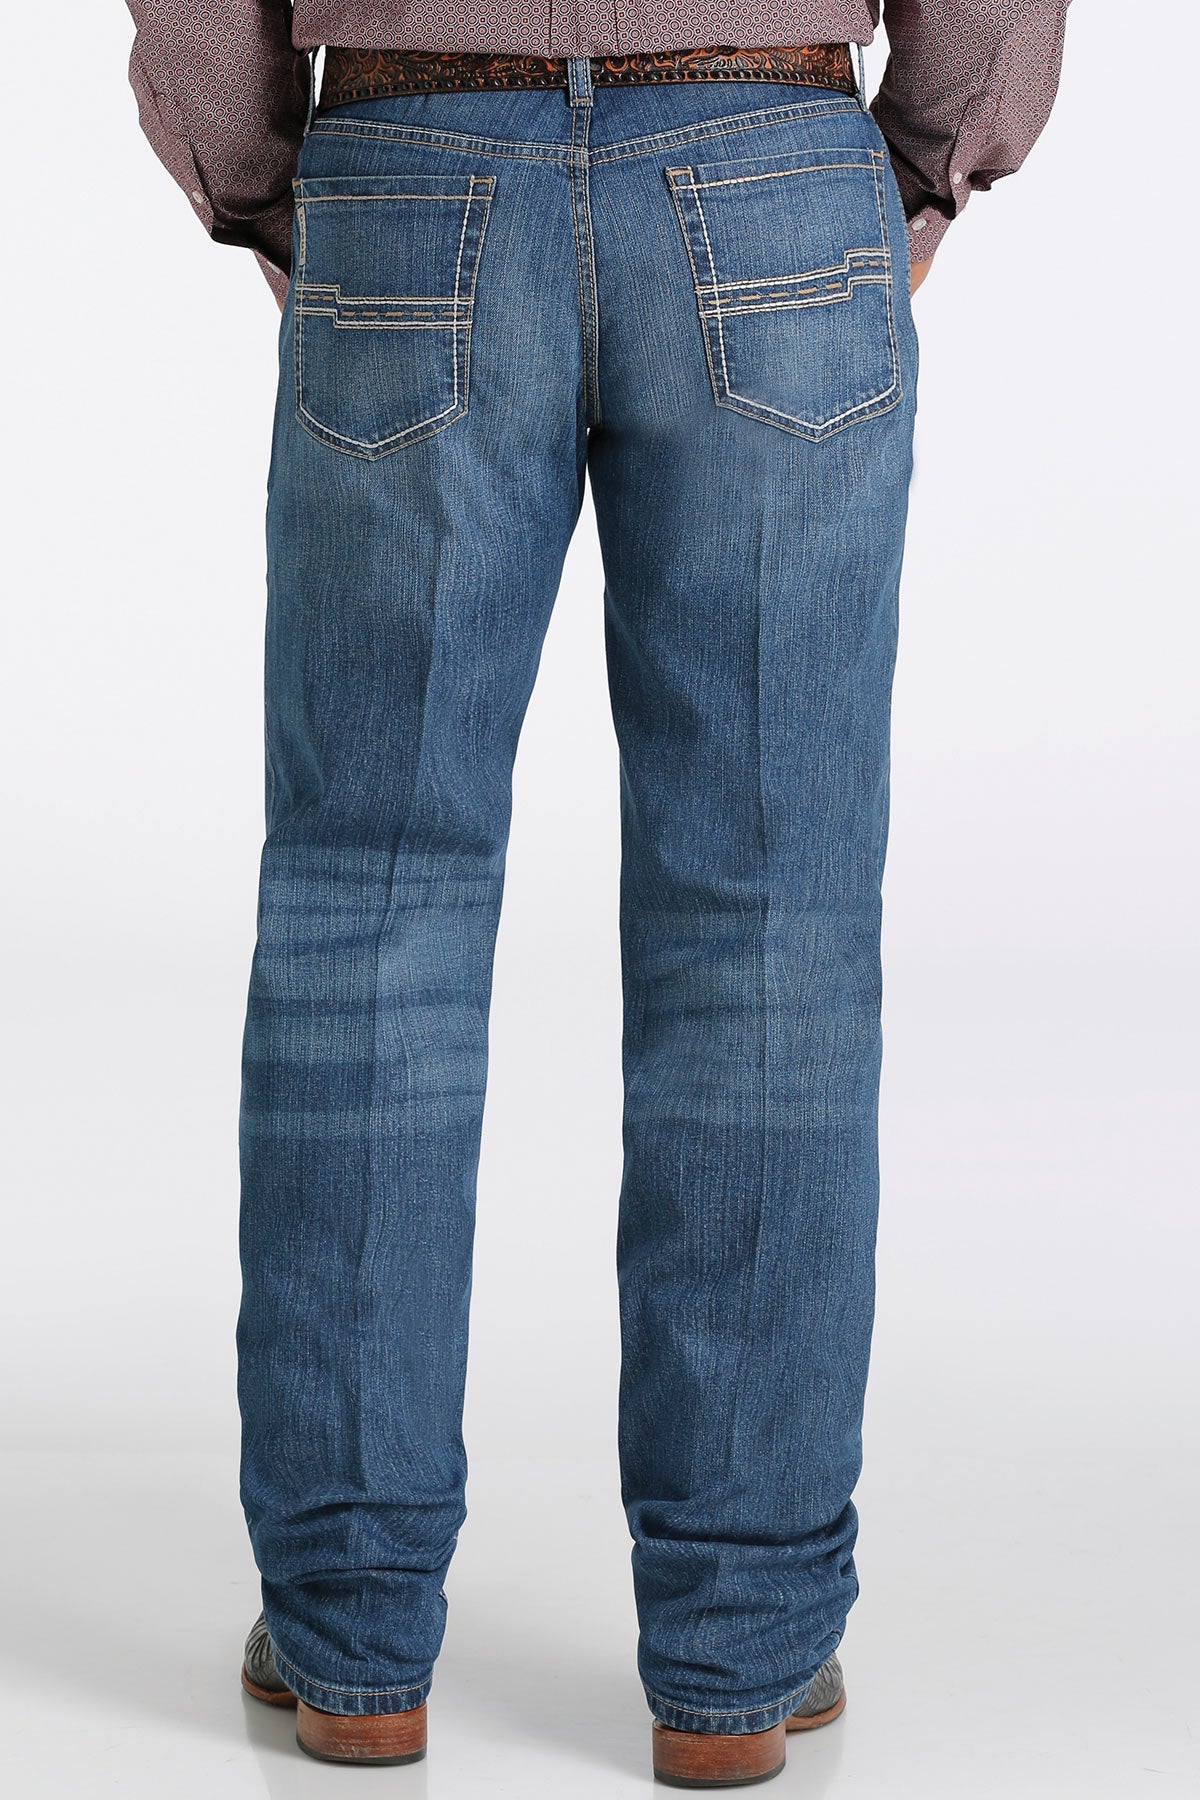 Cinch Jesse Jeans (8001)